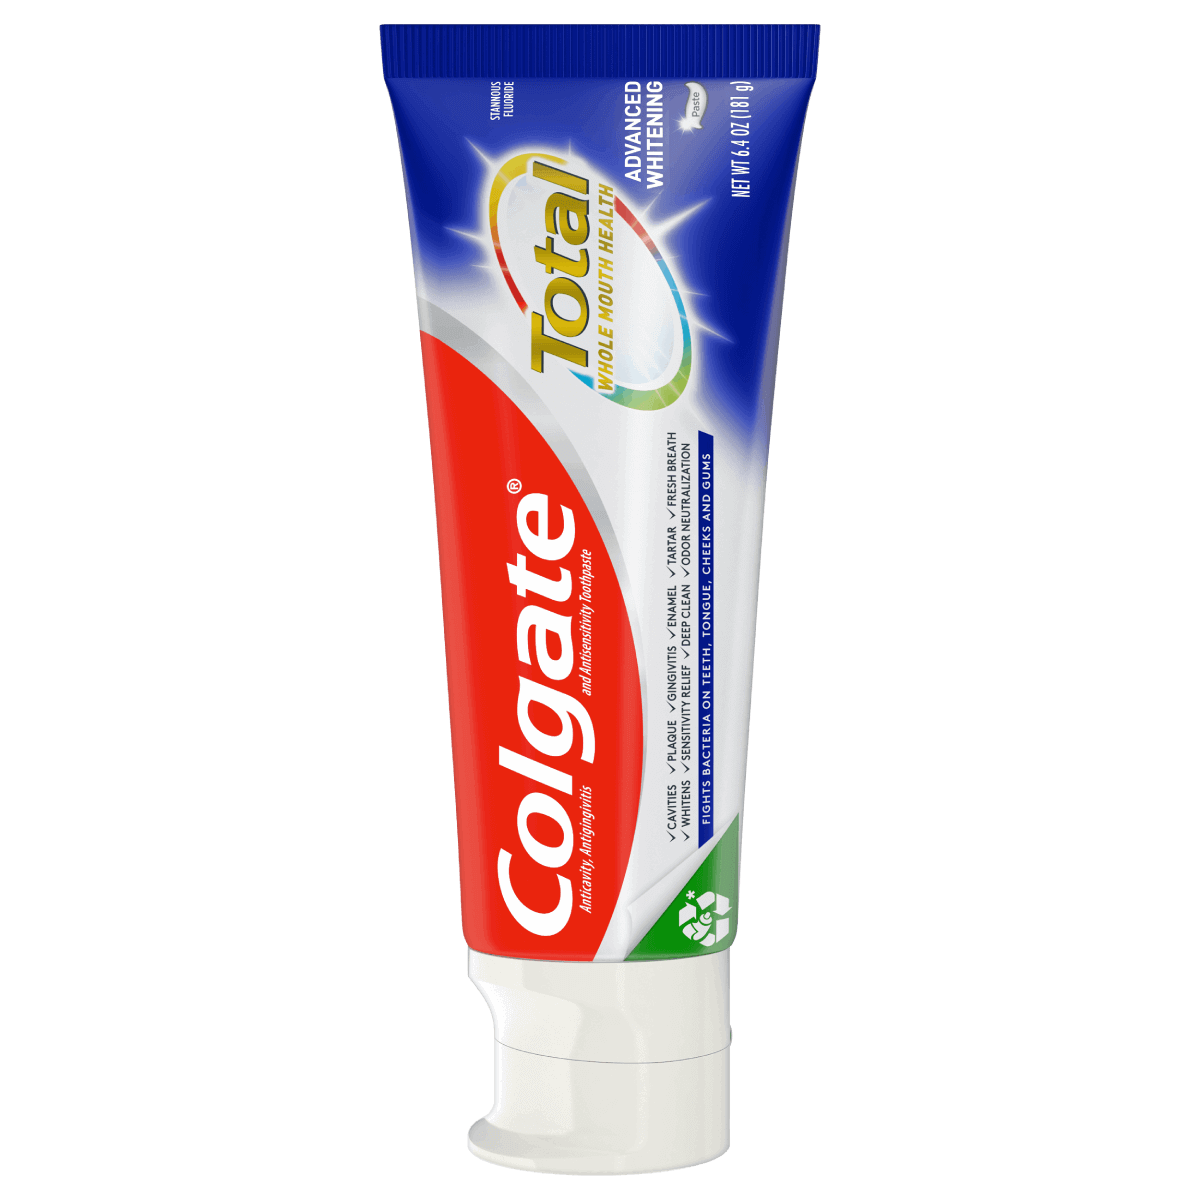 Packshot of Colgate Total Advanced Whitening Toothpaste